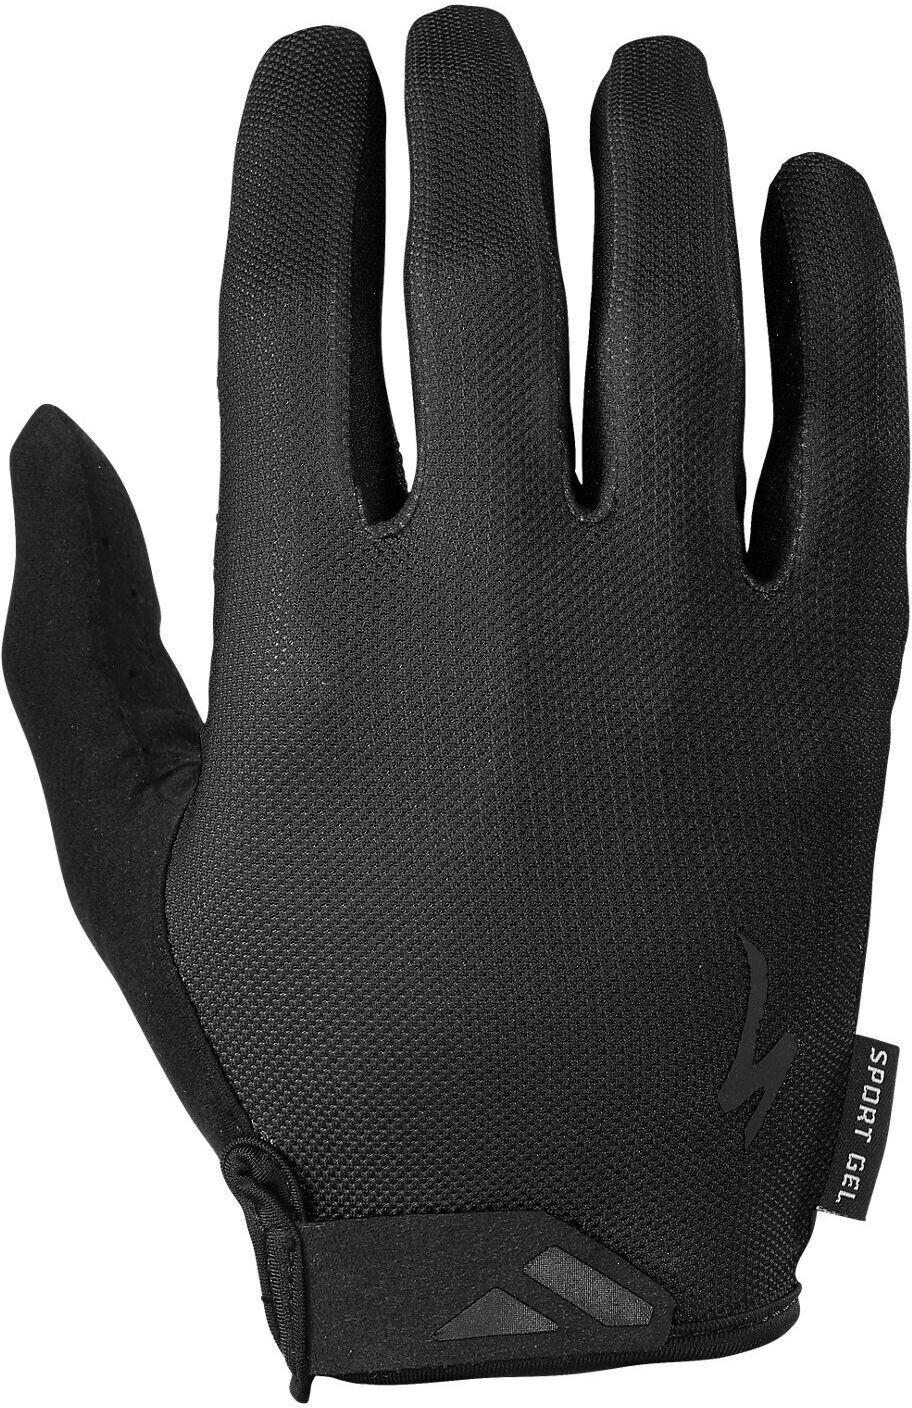 Specialized Body Geometry Sport Gel Gloves LF black